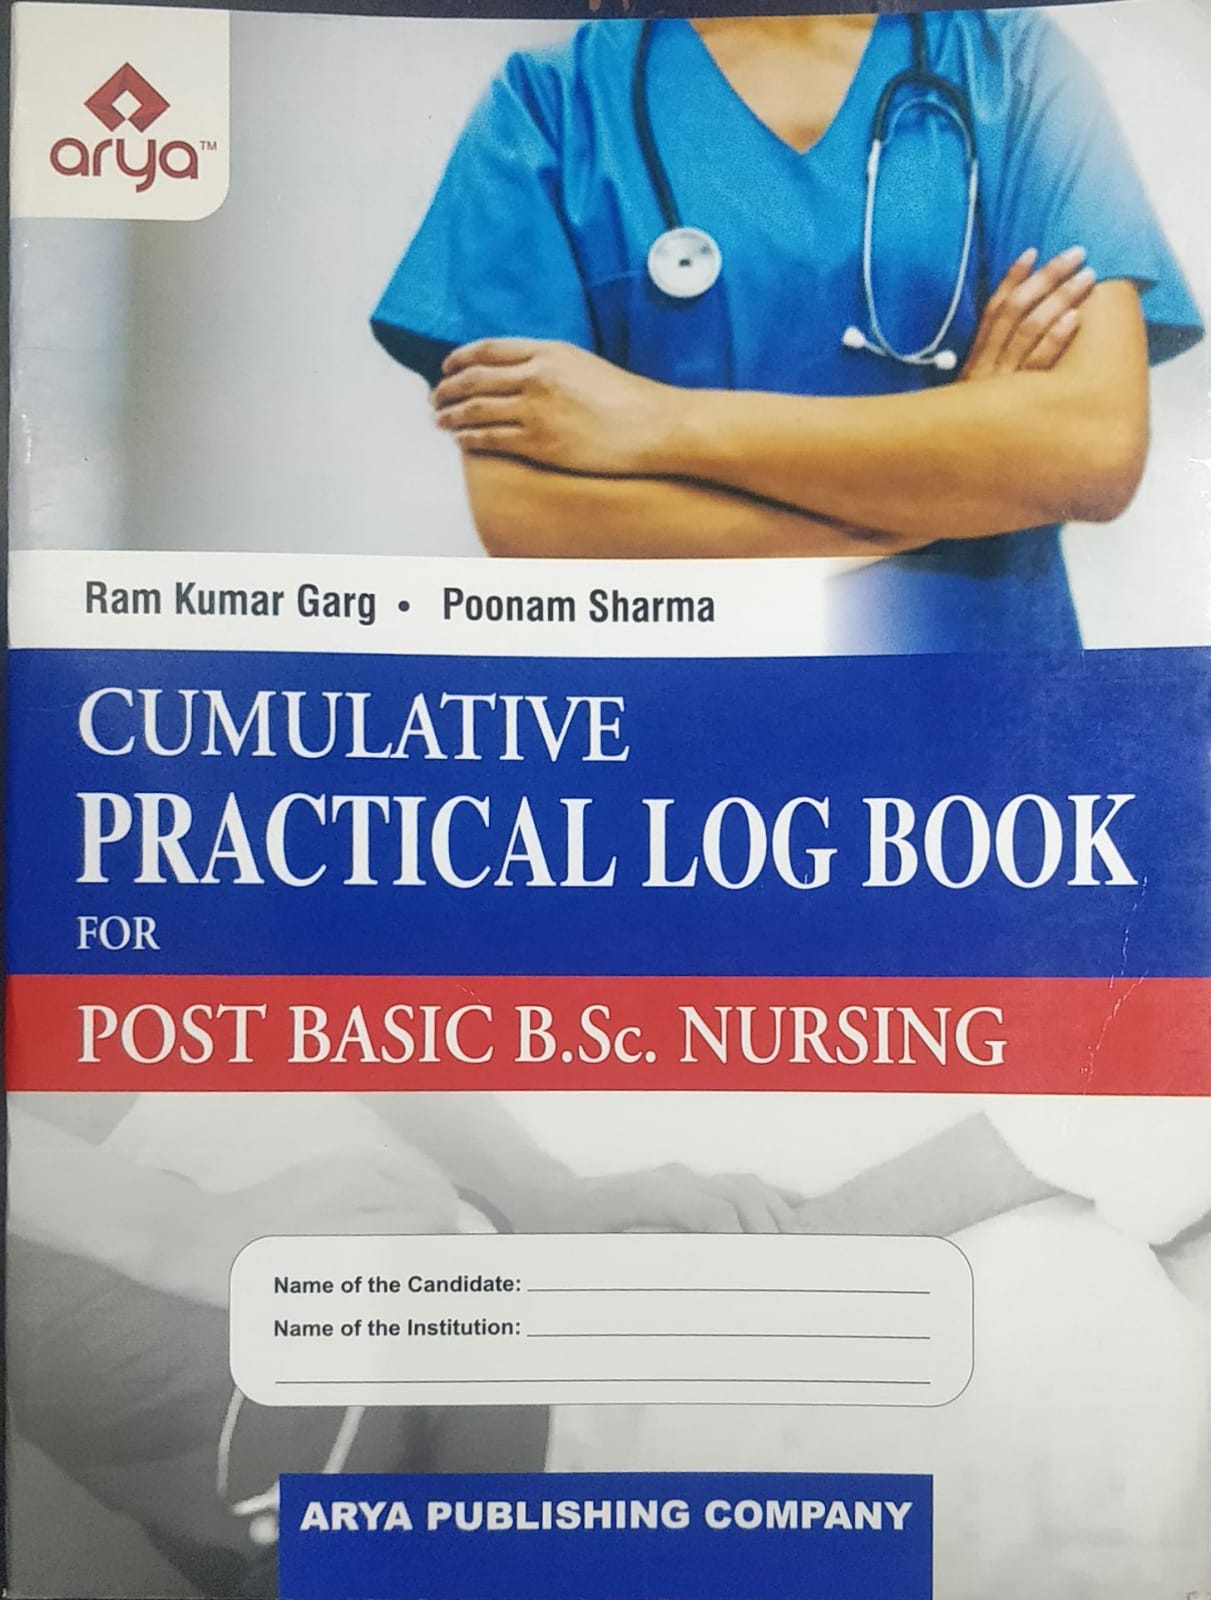 Cumulative Practical Log Book for Post Basic B.Sc. Nursing